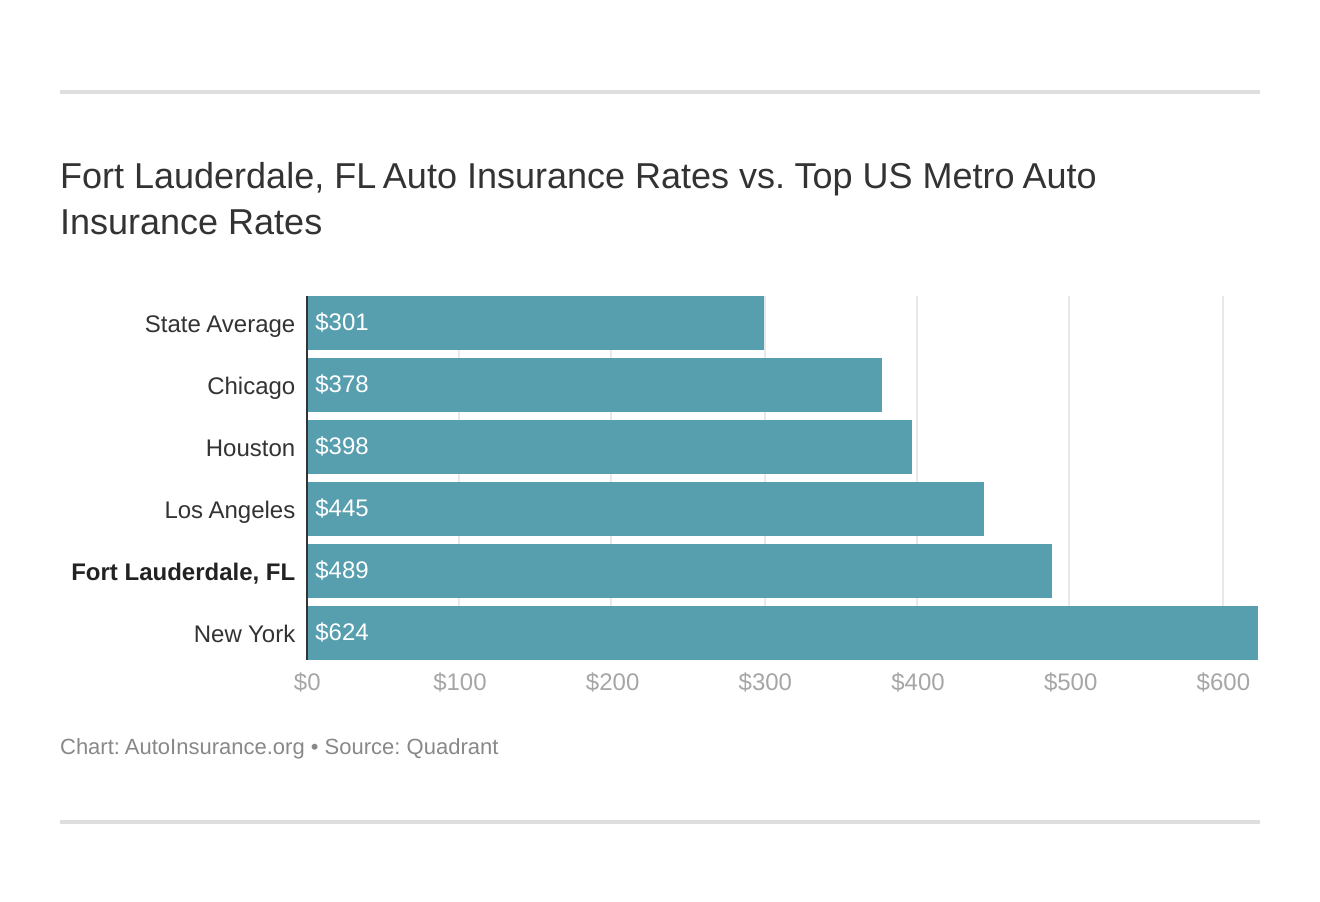 Fort Lauderdale, FL Auto Insurance Rates vs. Top US Metro Auto Insurance Rates